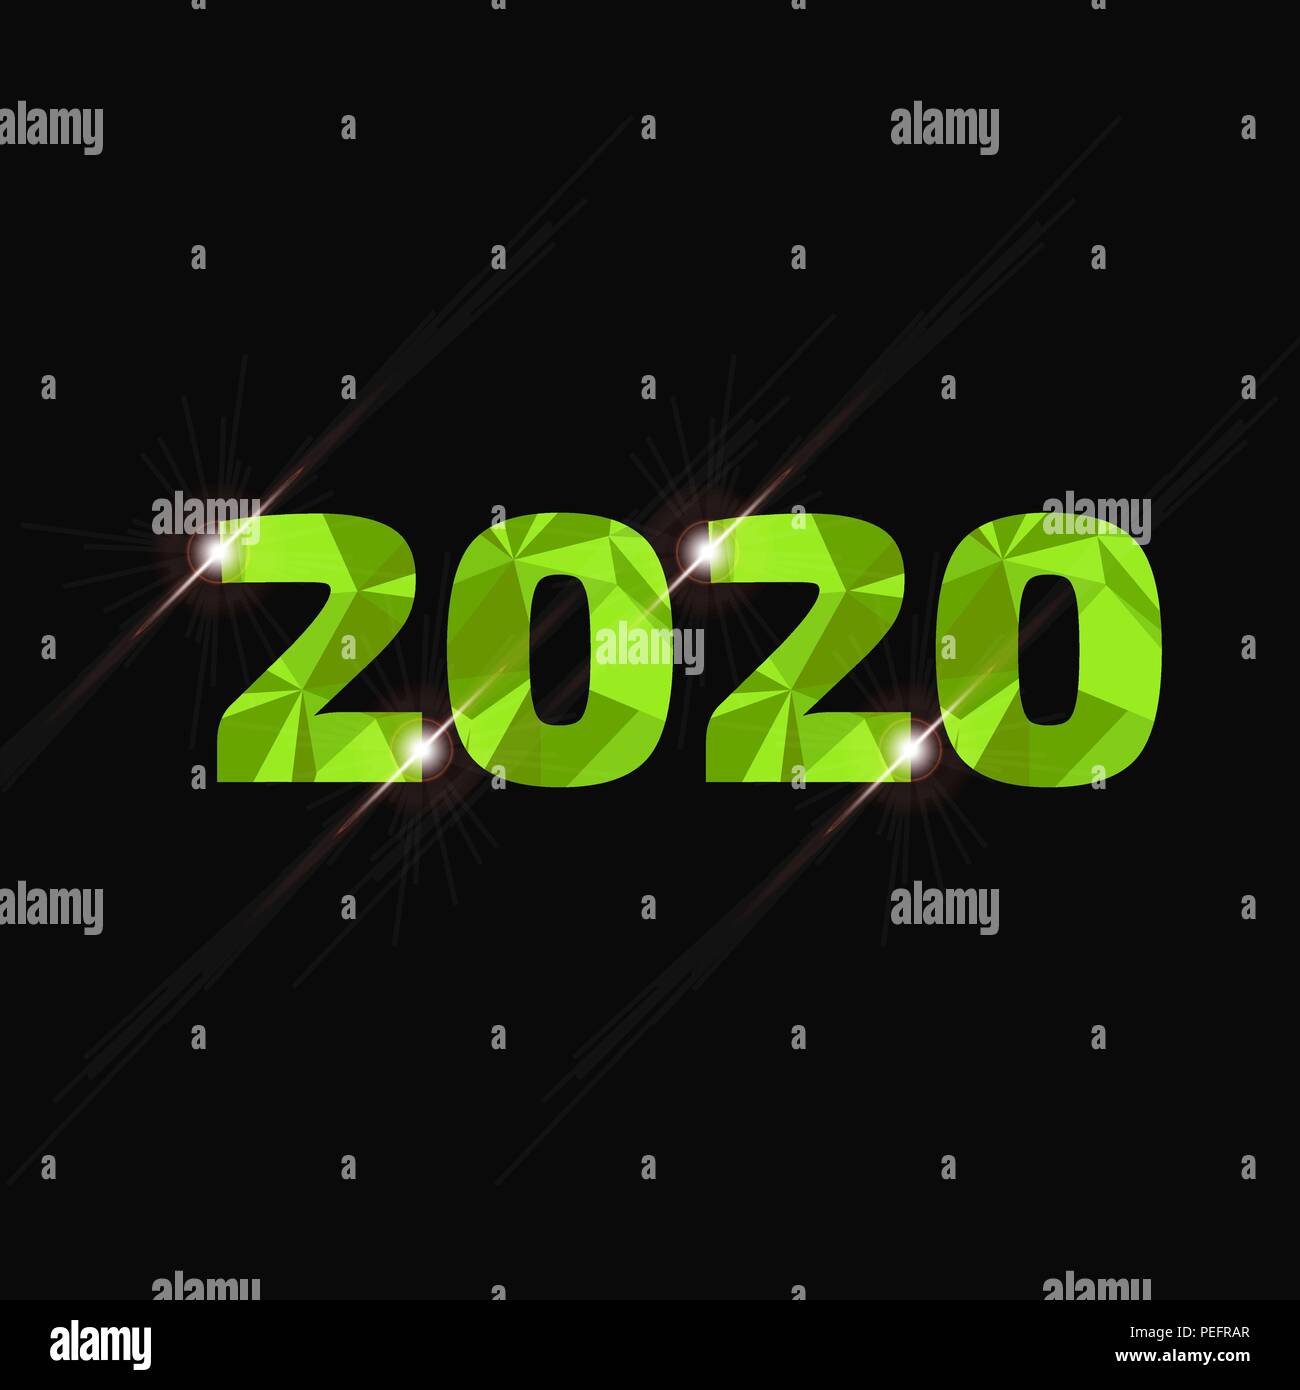 Rar 2020